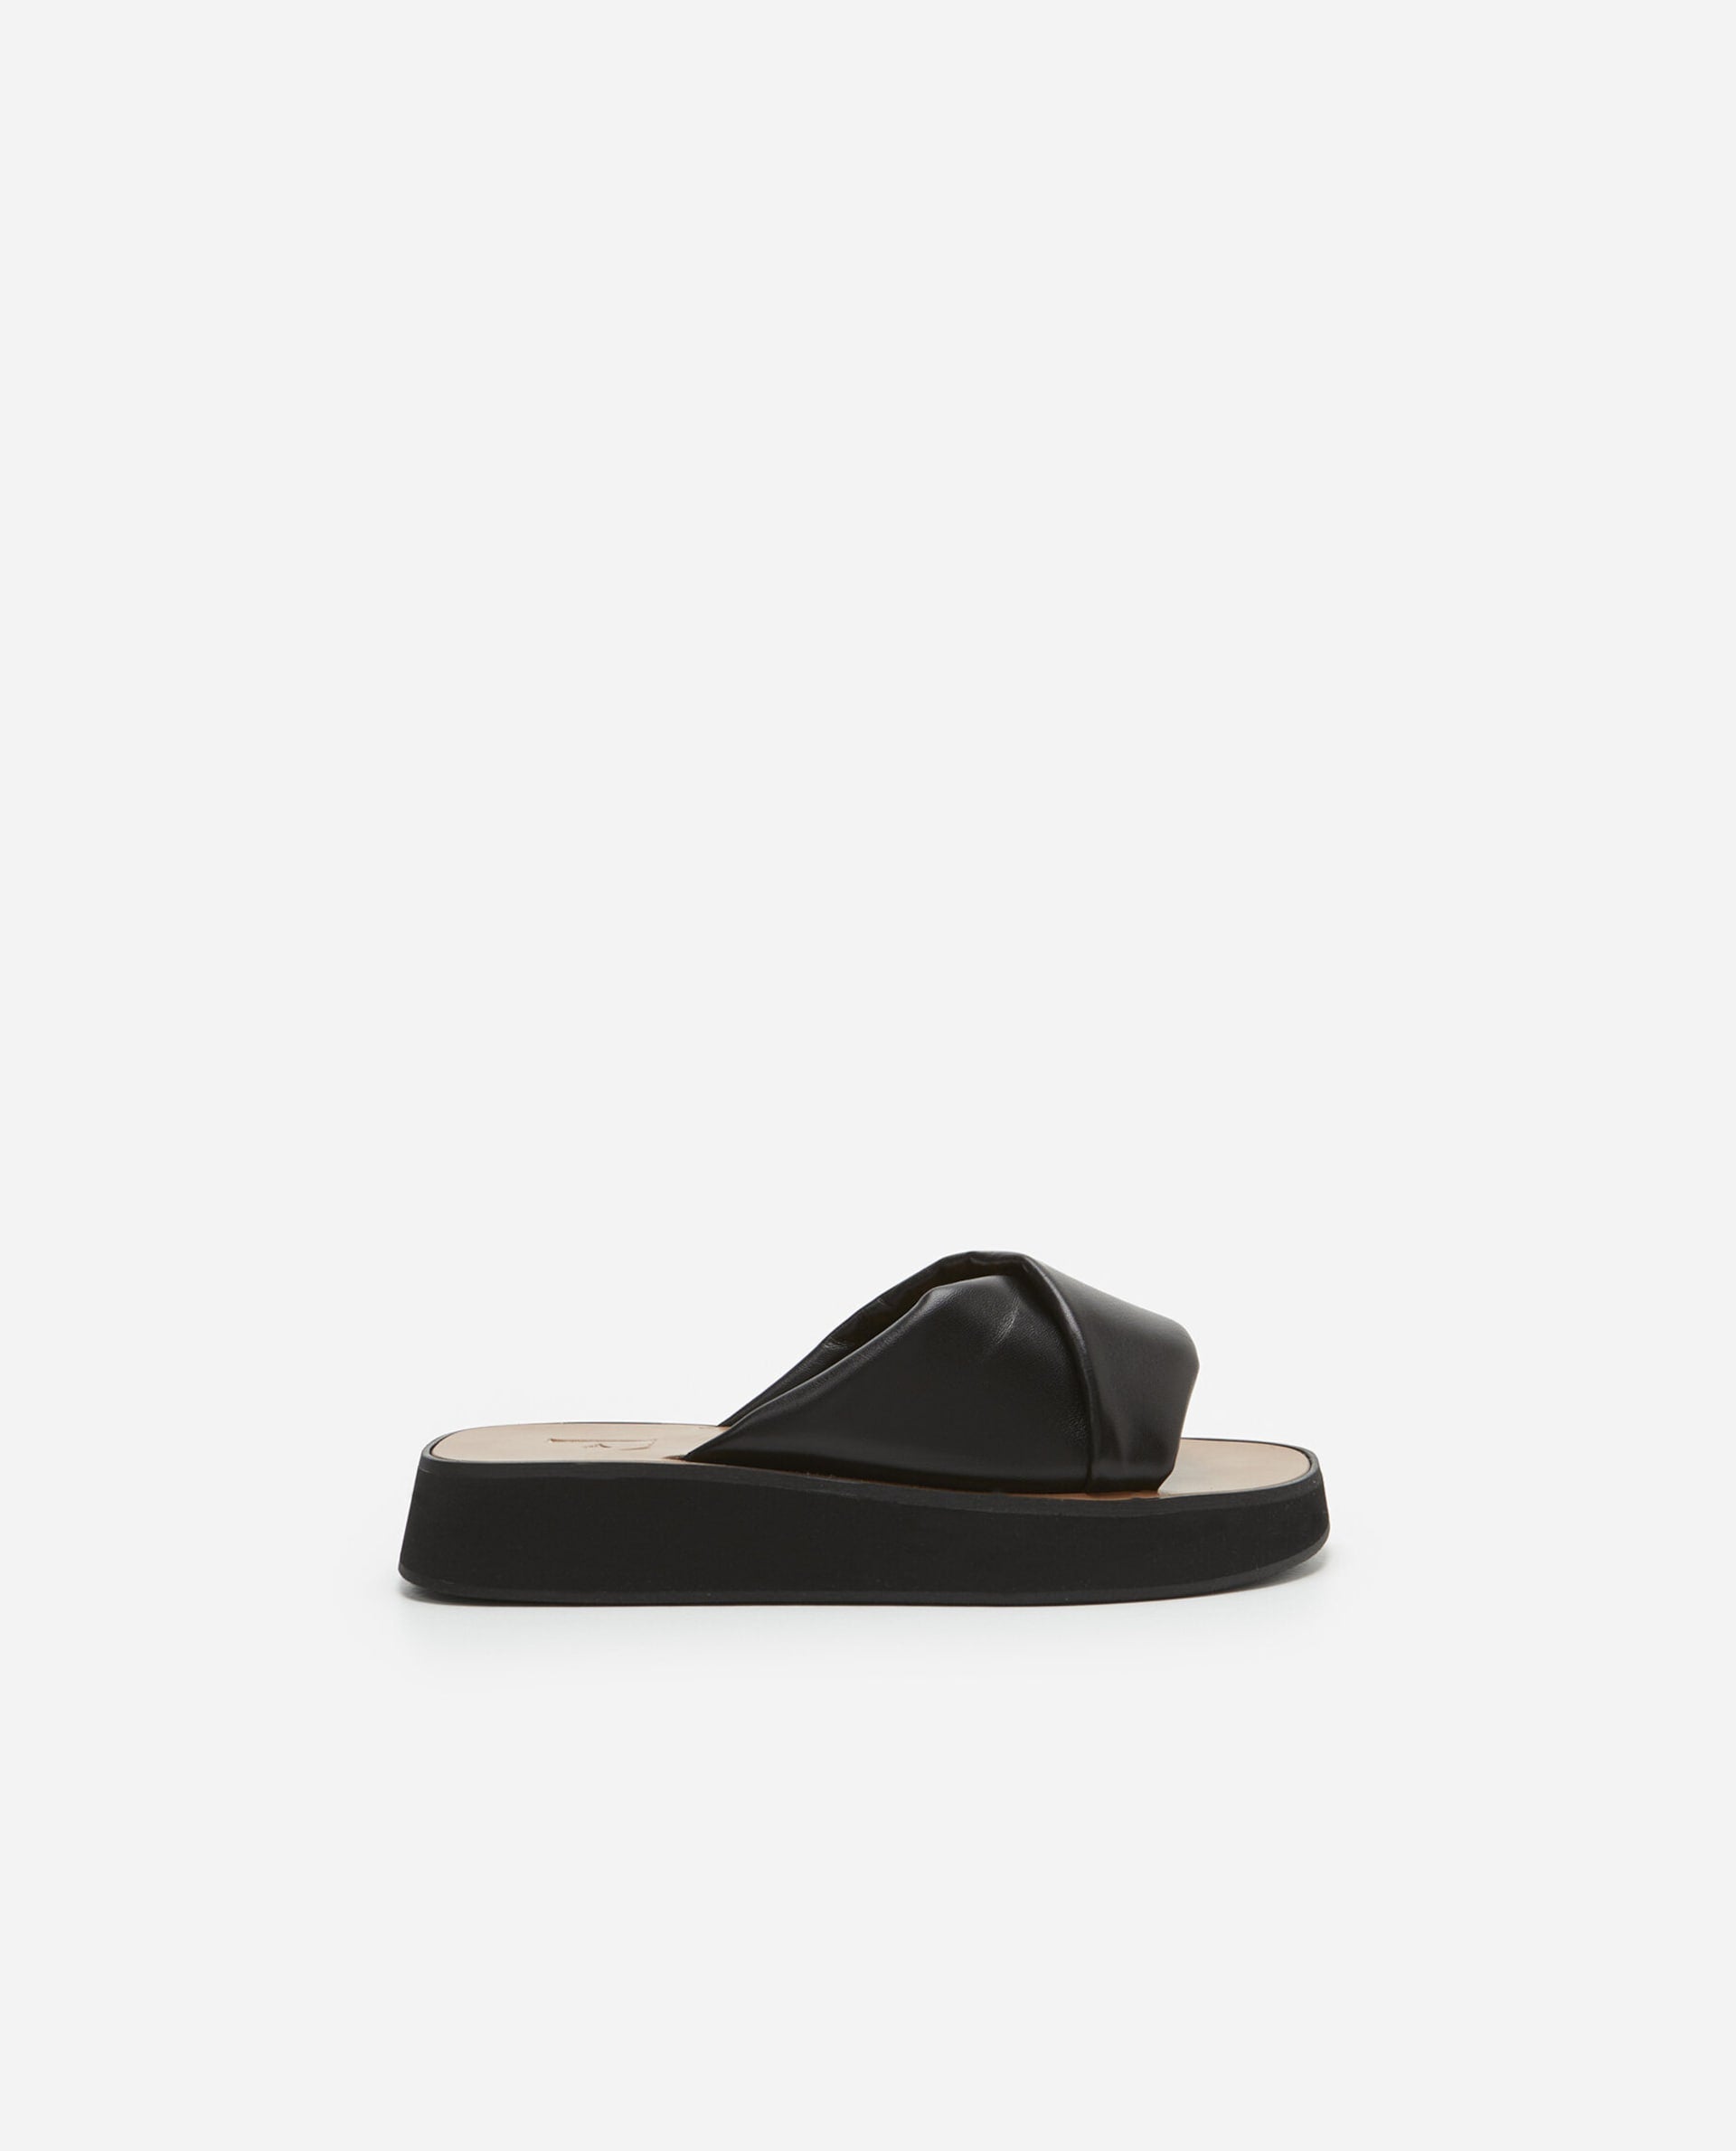 Bea Black Leather Flat Sandals 22010721101-001 - 7